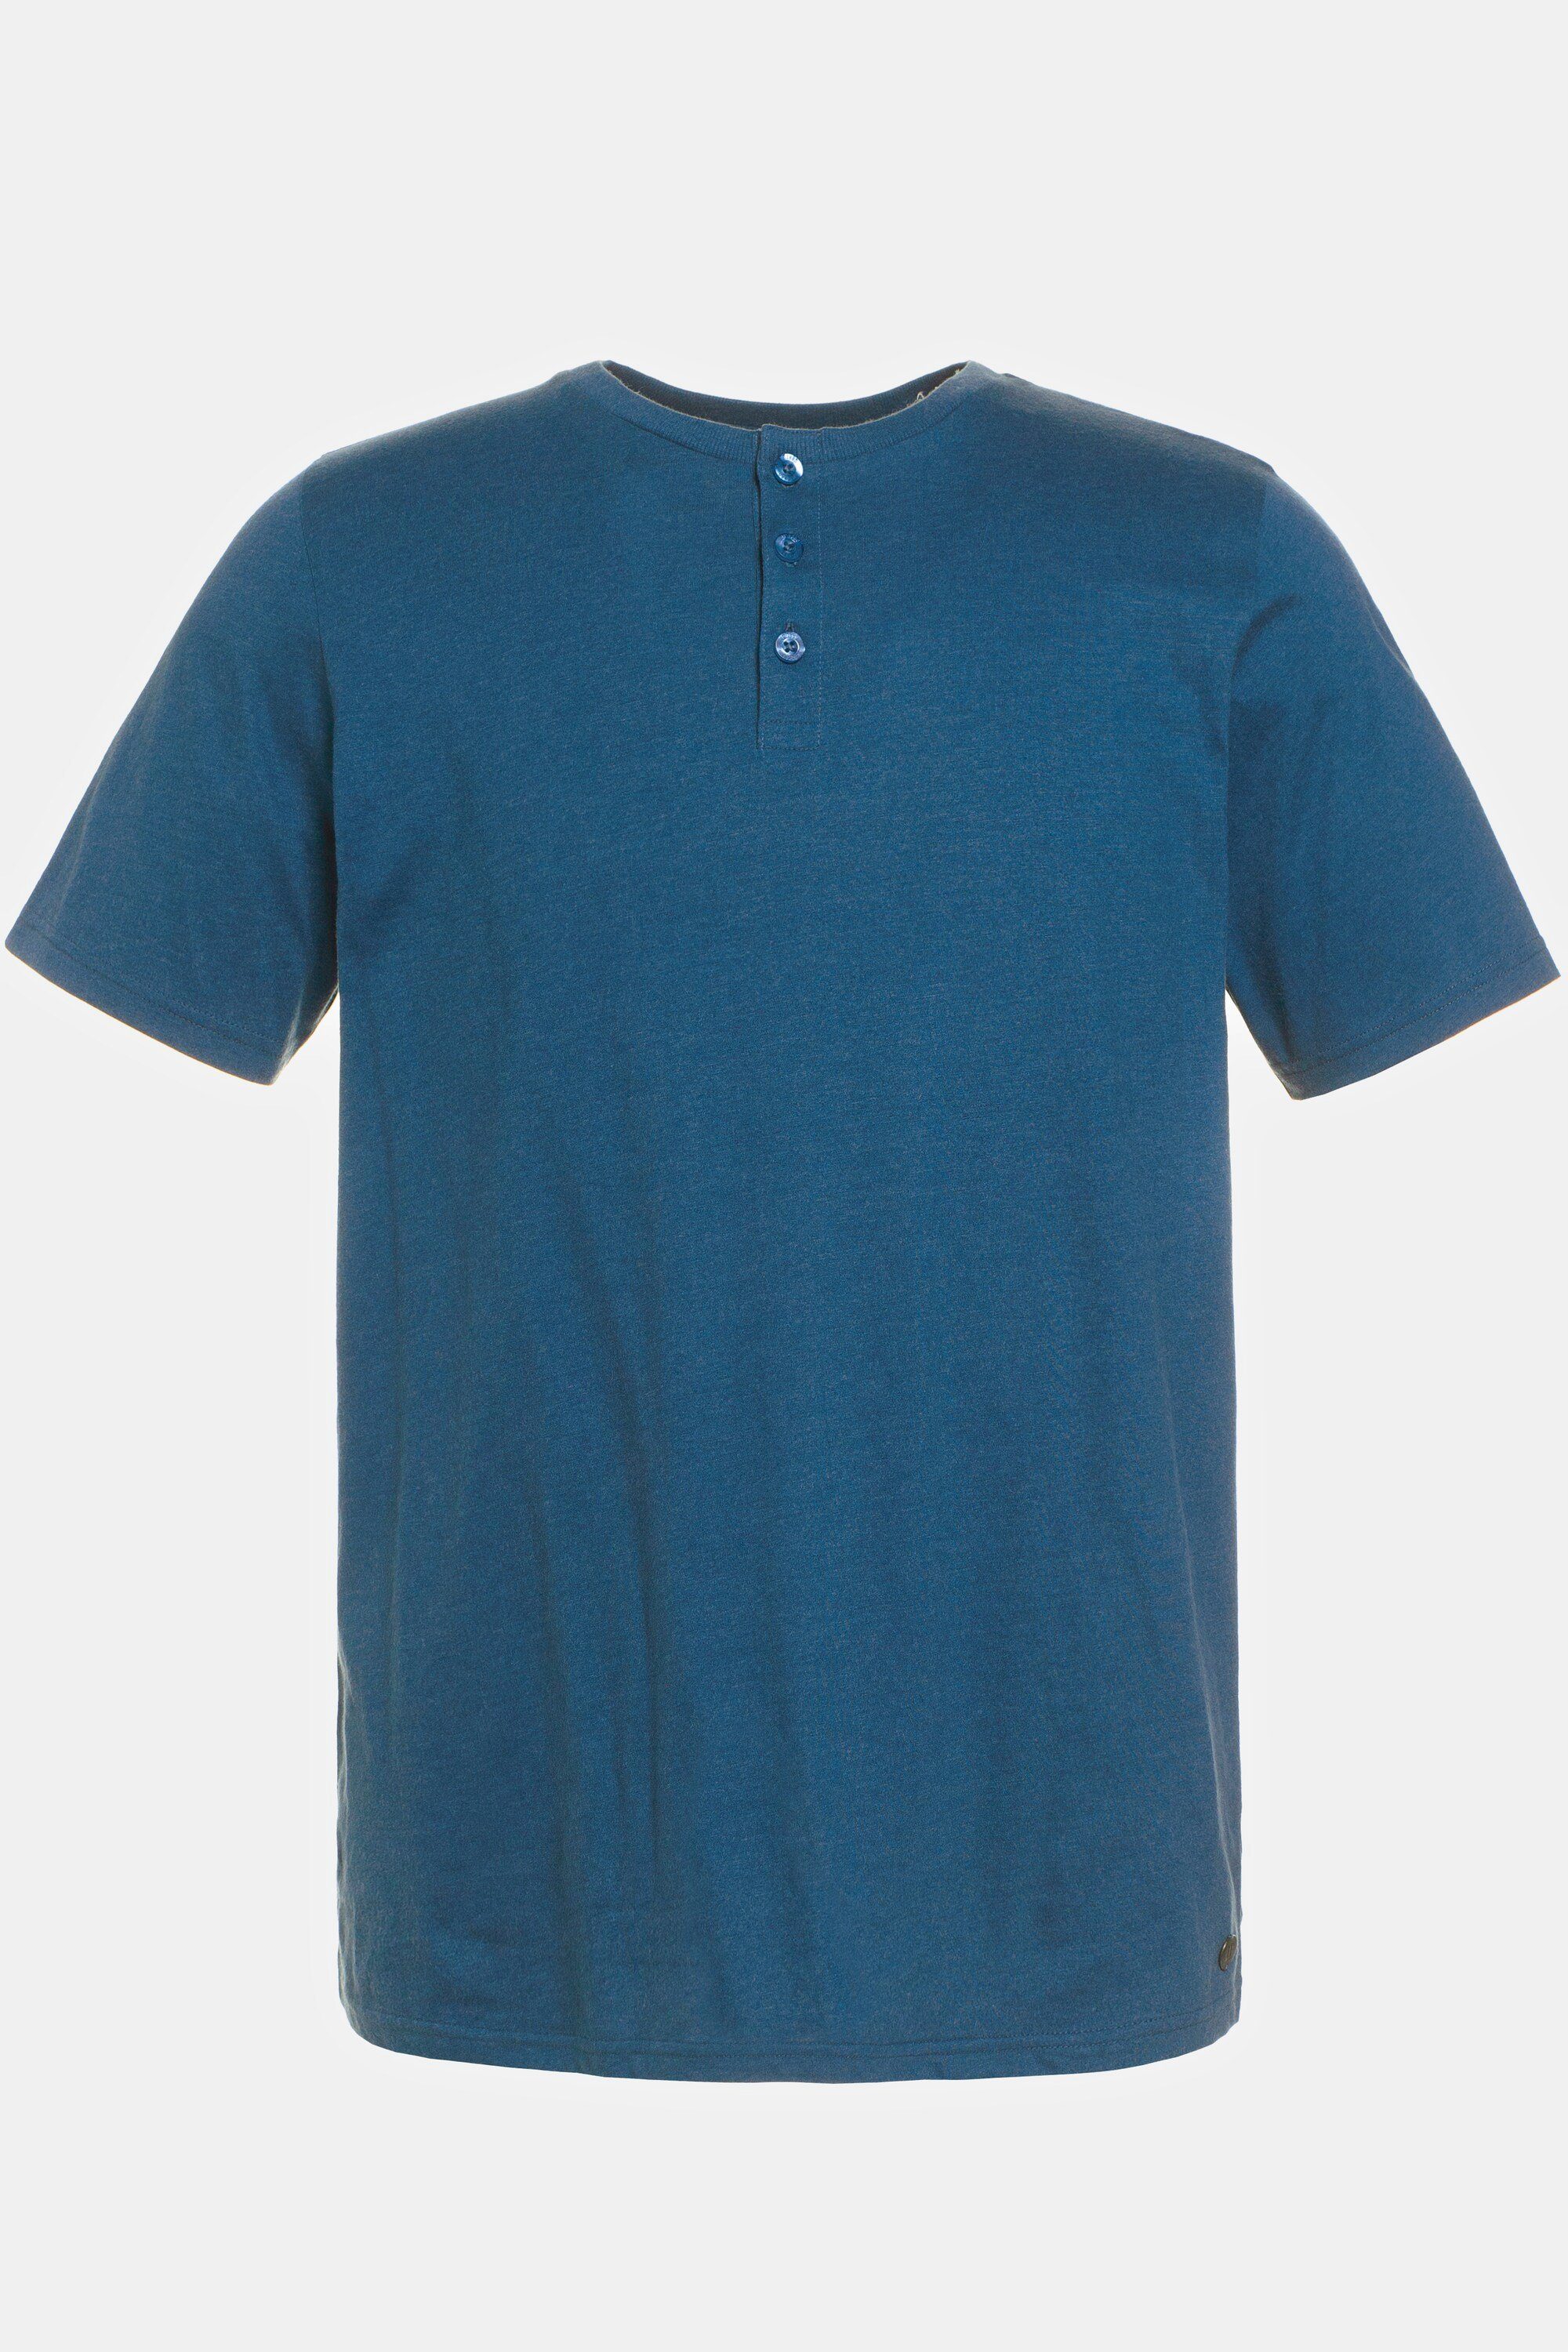 JP1880 T-Shirt denim Knopfleiste Basic Halbarm Henley blue